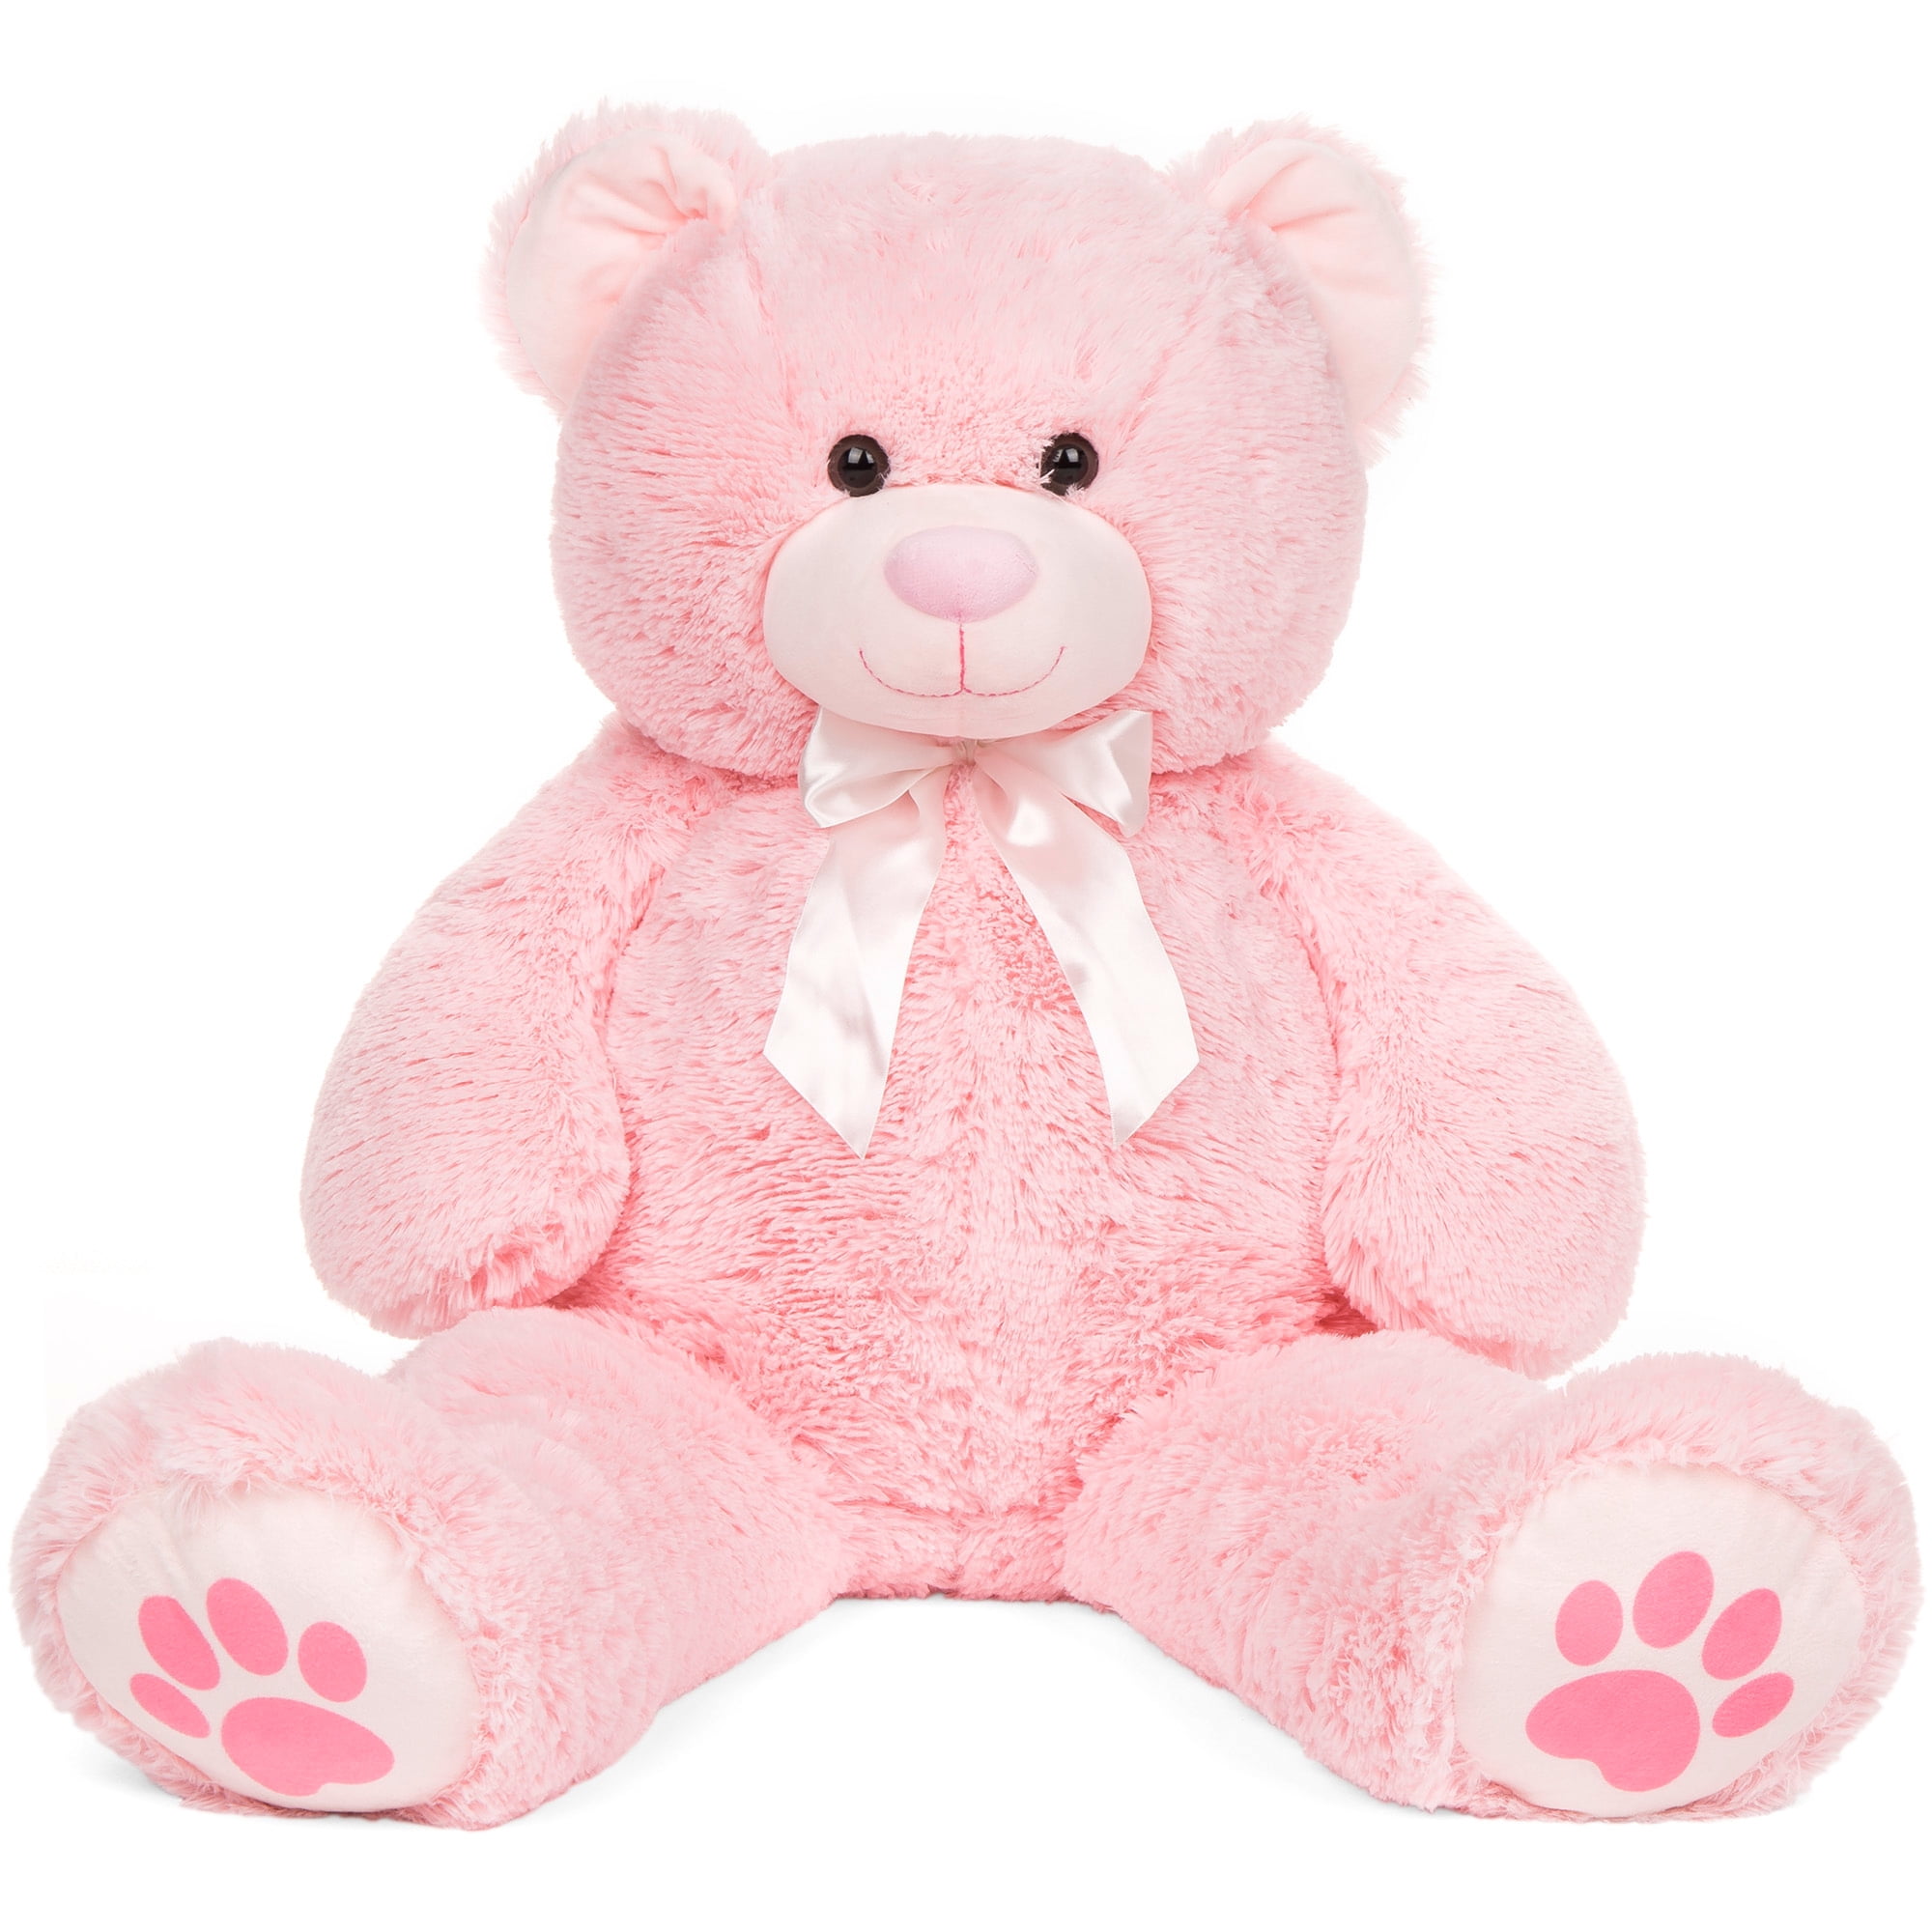 Footprints BCP 38in Giant Plush Teddy Bear Stuffed Animal Toy w/ Red Bow Tie 